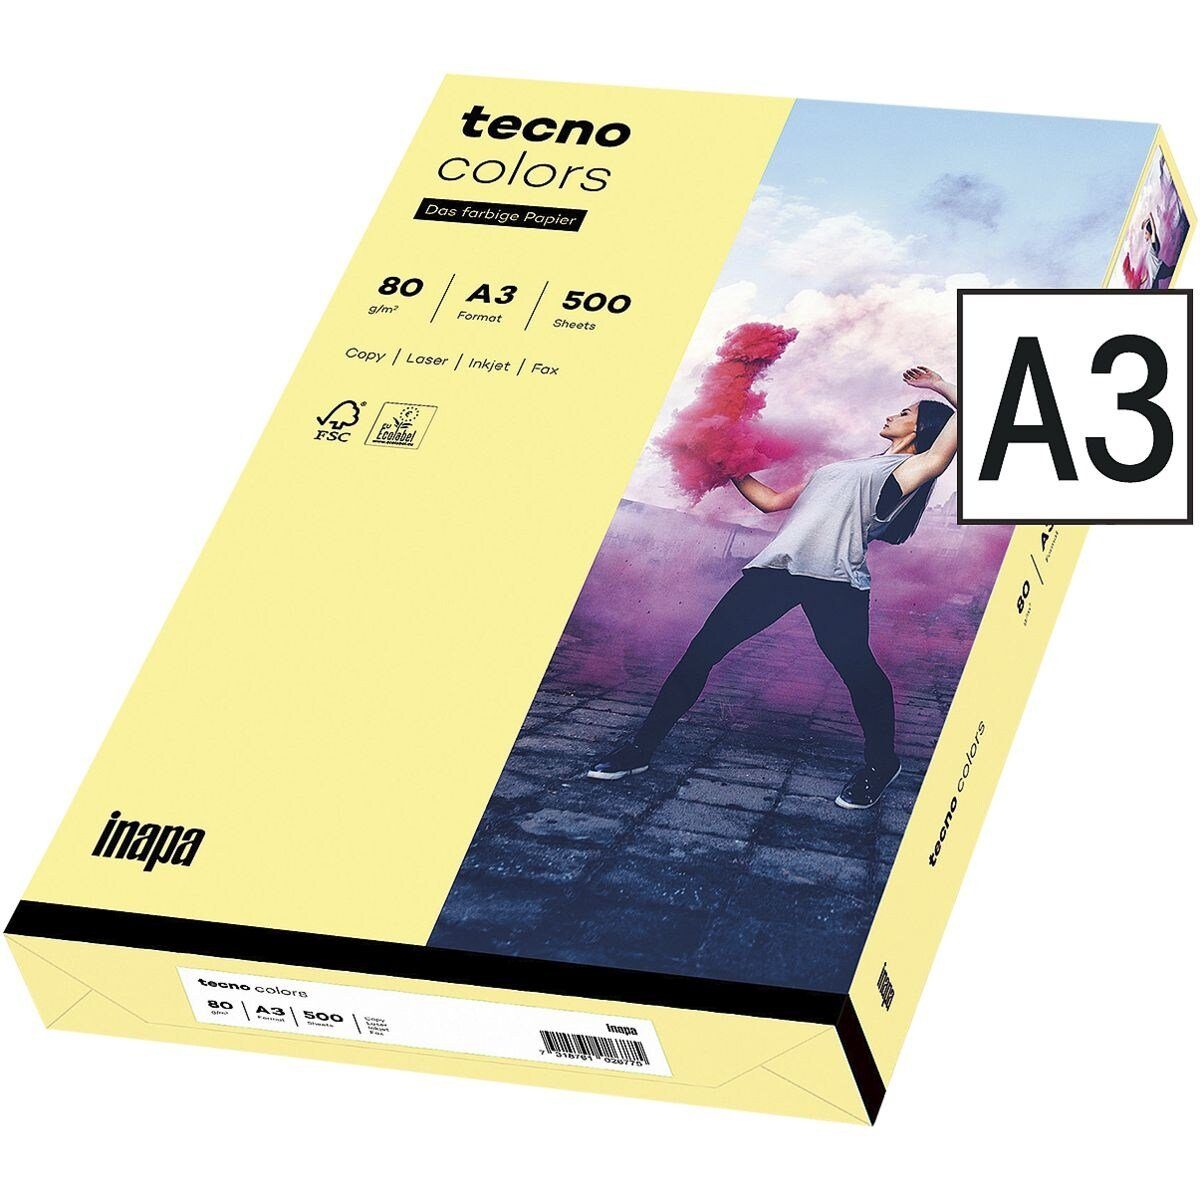 Inapa tecno Drucker- und Kopierpapier Rainbow / tecno Colors, Pastellfarben, Format DIN A3, 80 g/m², 500 Blatt hellgelb